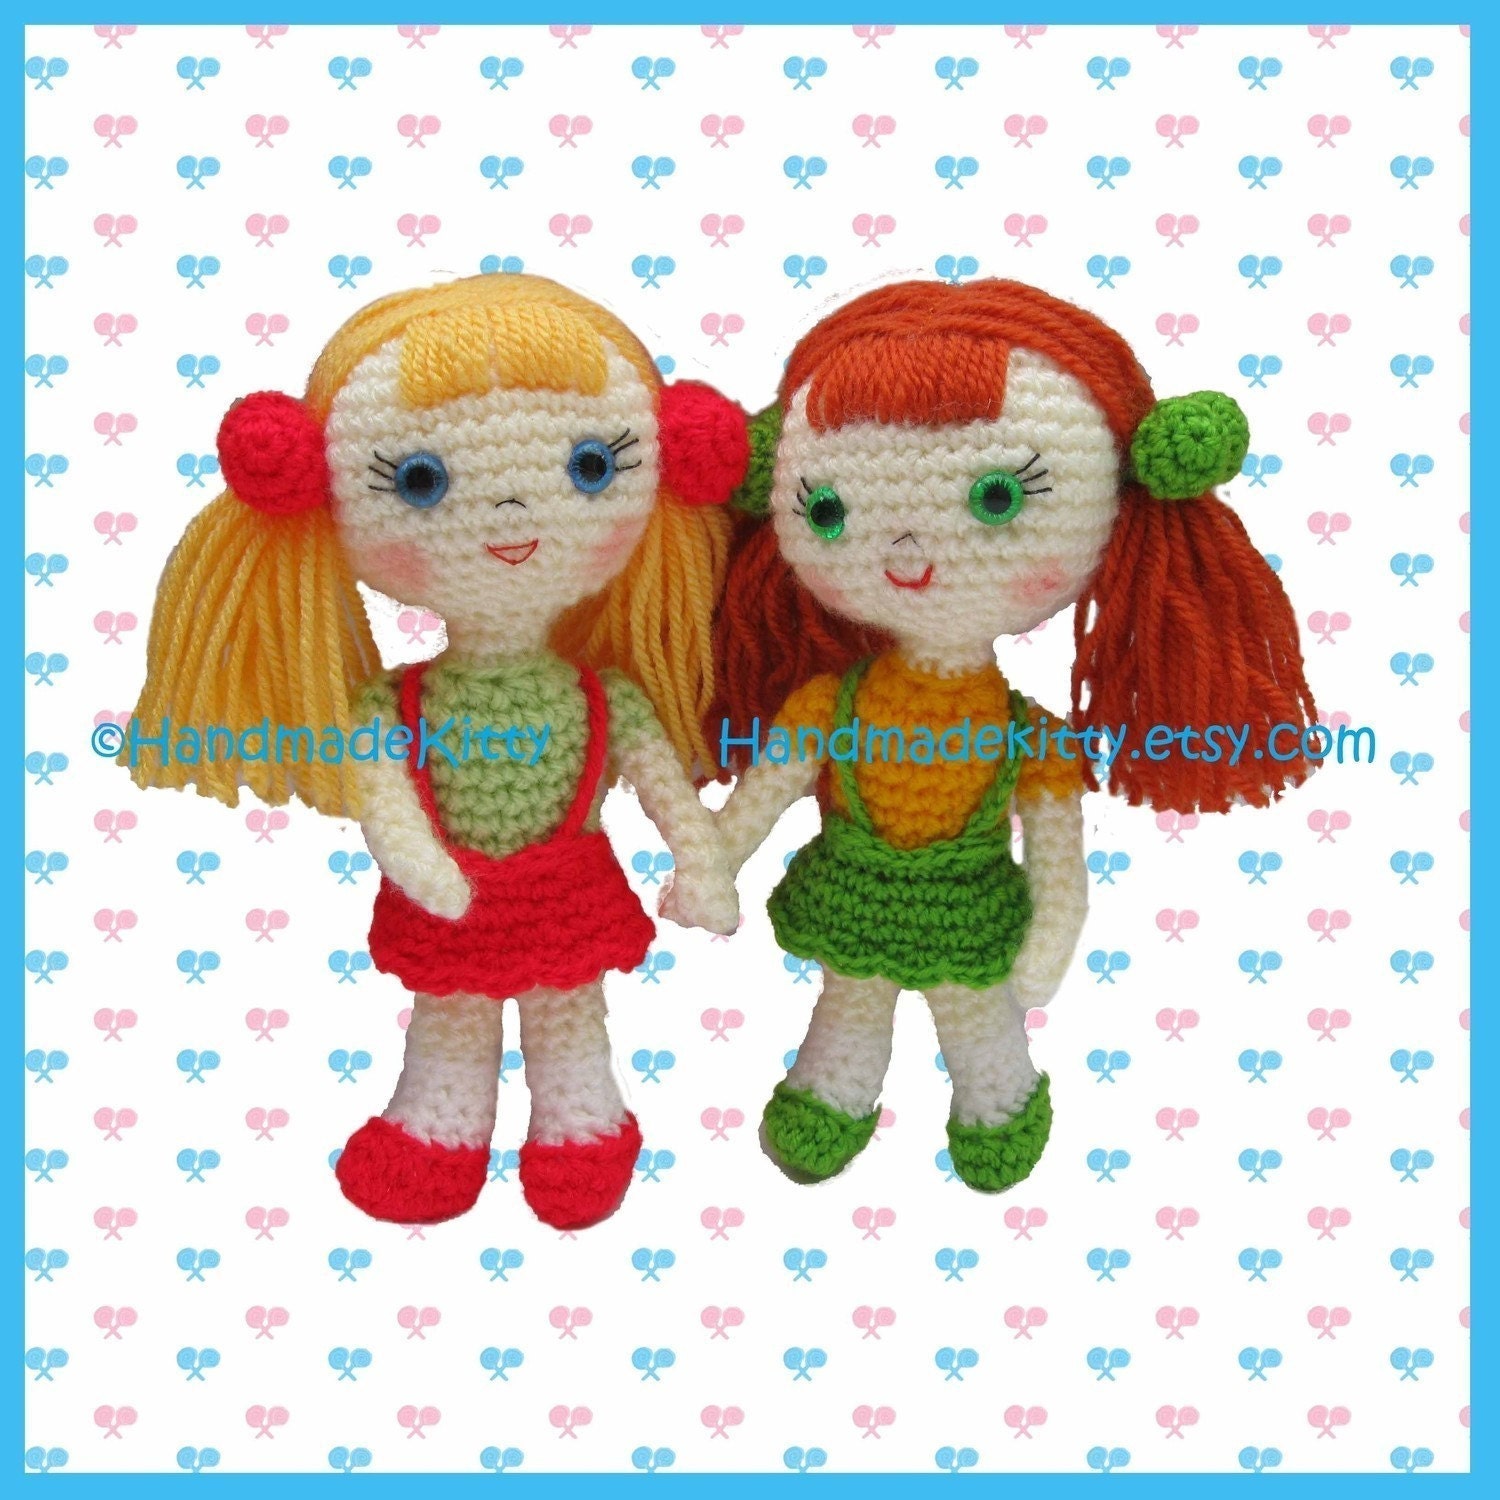 Candy Girls Amigurumi PDF Crochet Pattern by HandmadeKitty